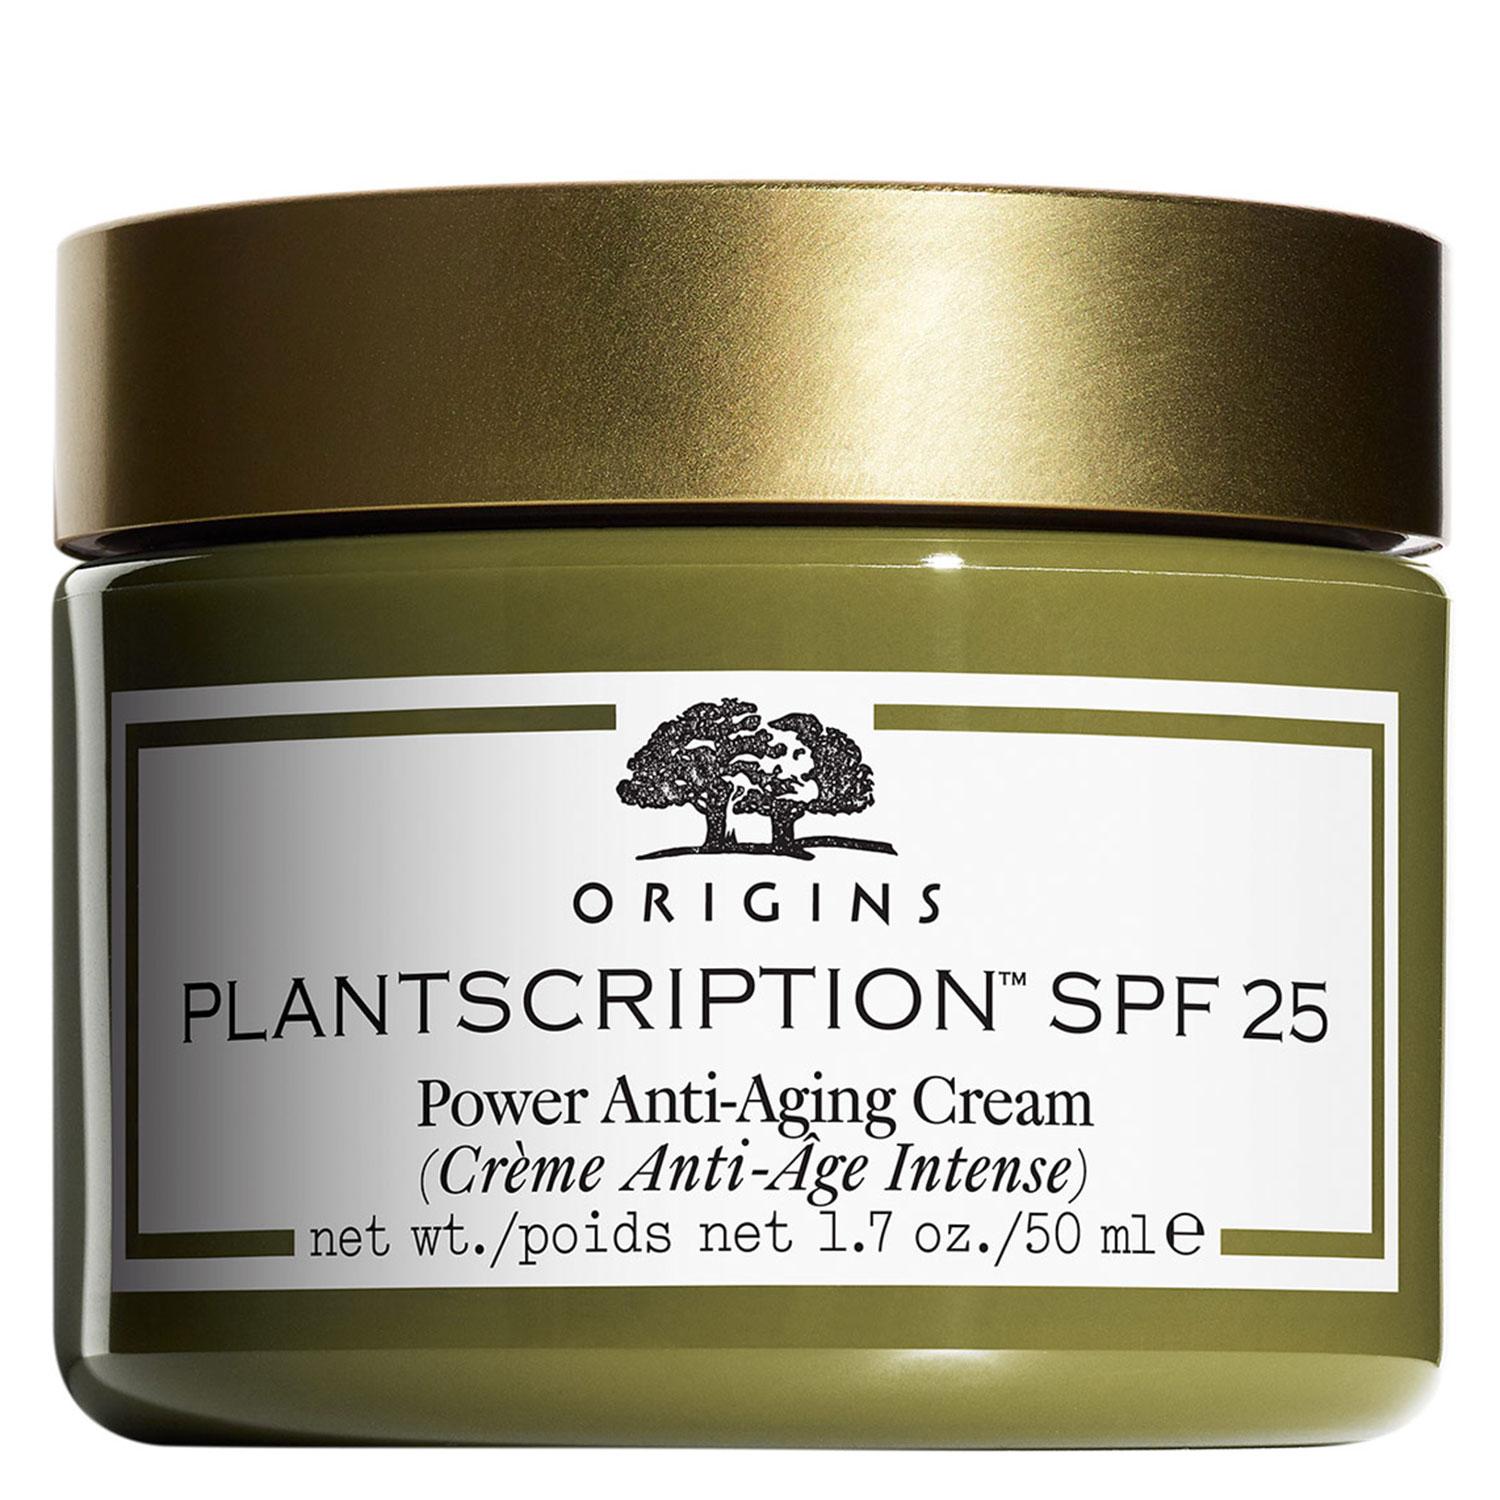 Origins Plantscription - SPF 25 Power Anti-Aging Cream